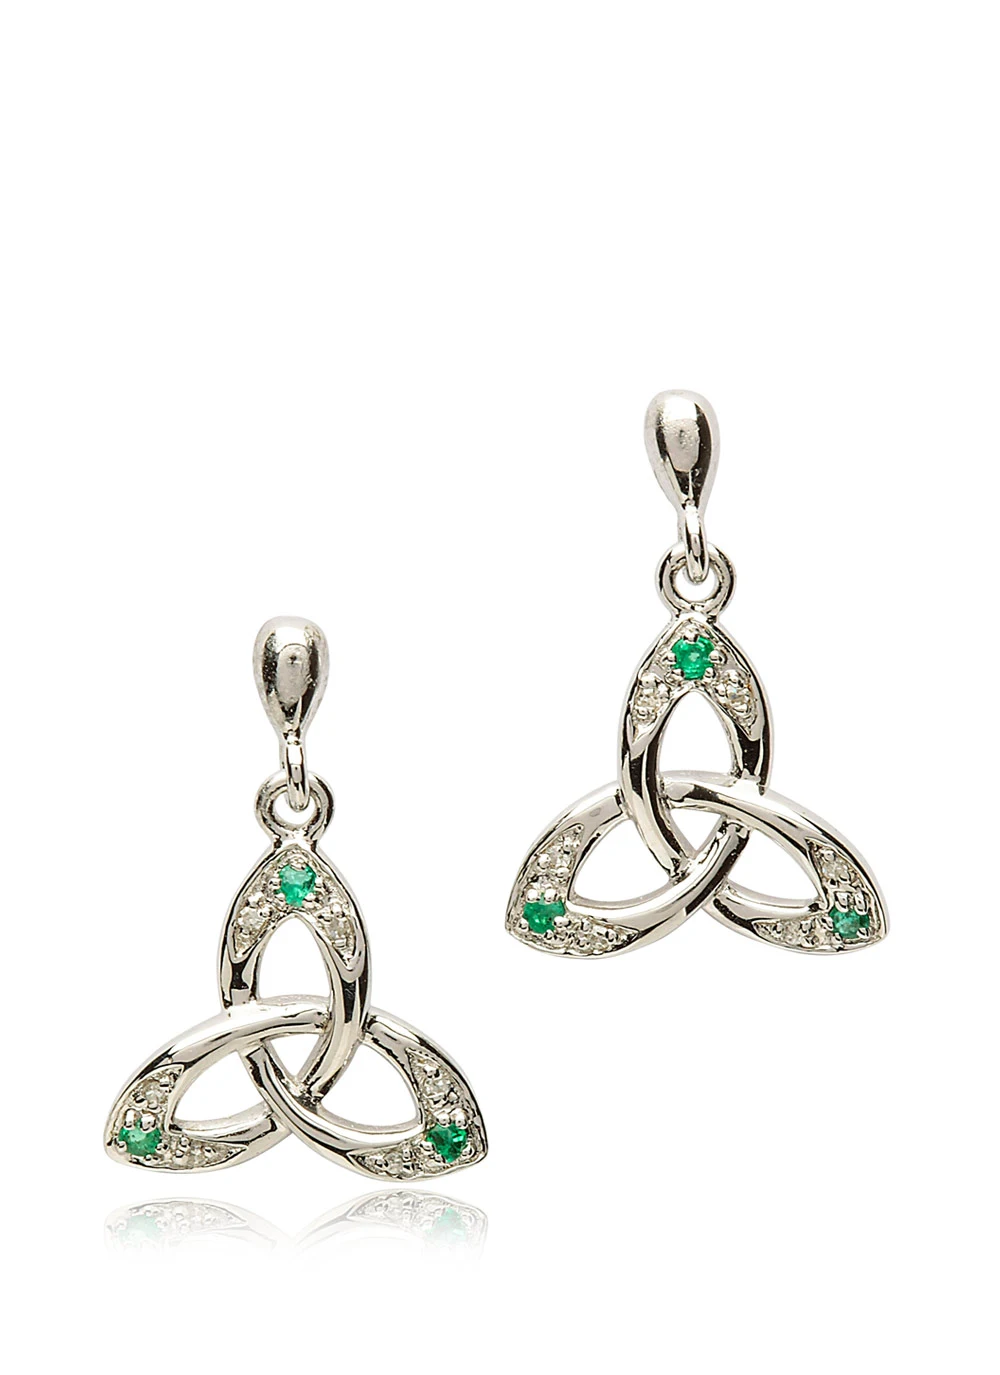 Emerald & Diamond Trinity Knot Earrings | Blarney